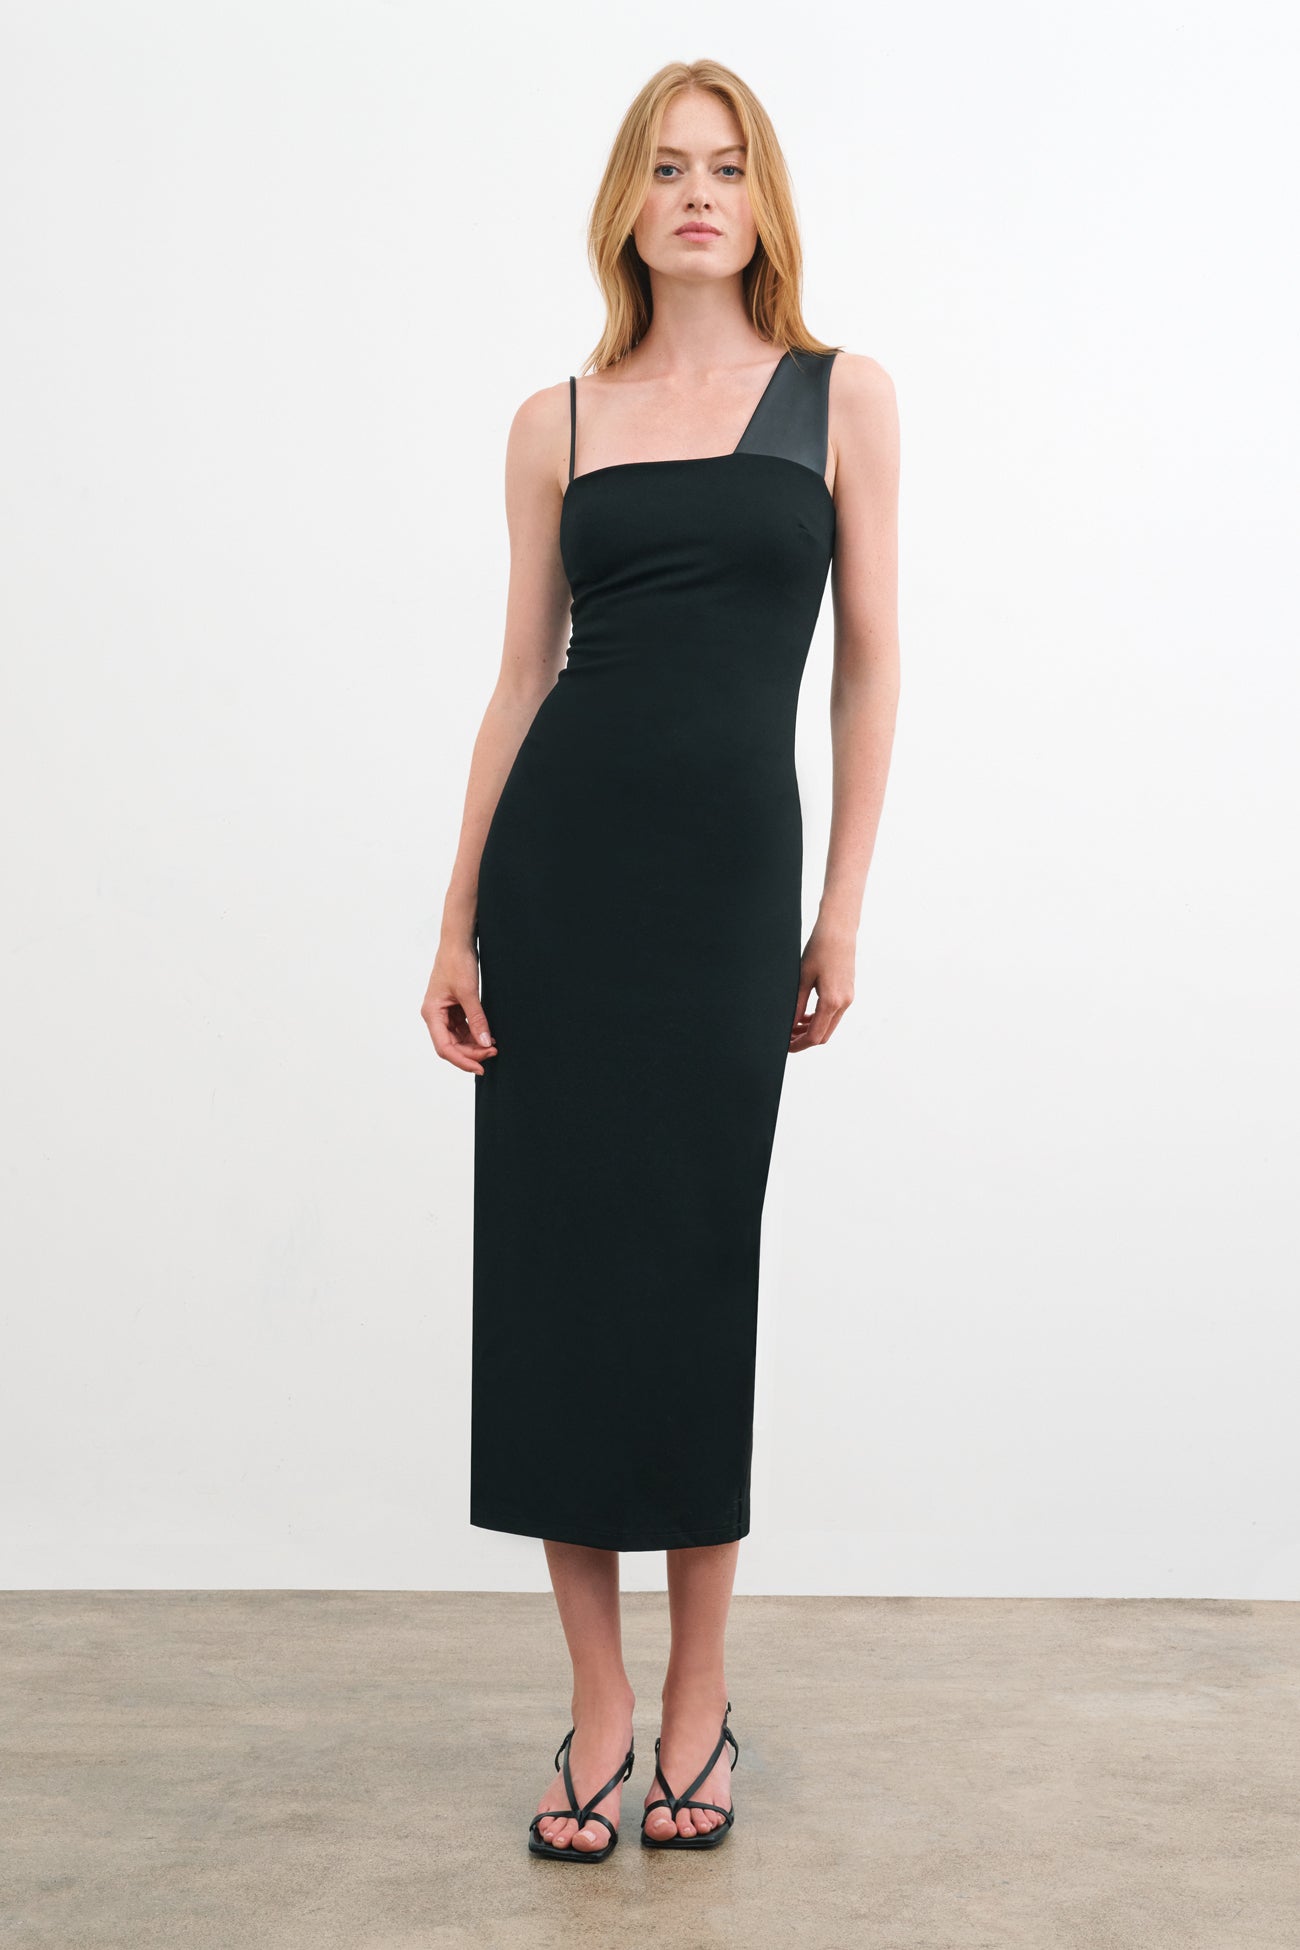 Long Black Maxi Sleeveless Dress - Nova Dress | Marcella